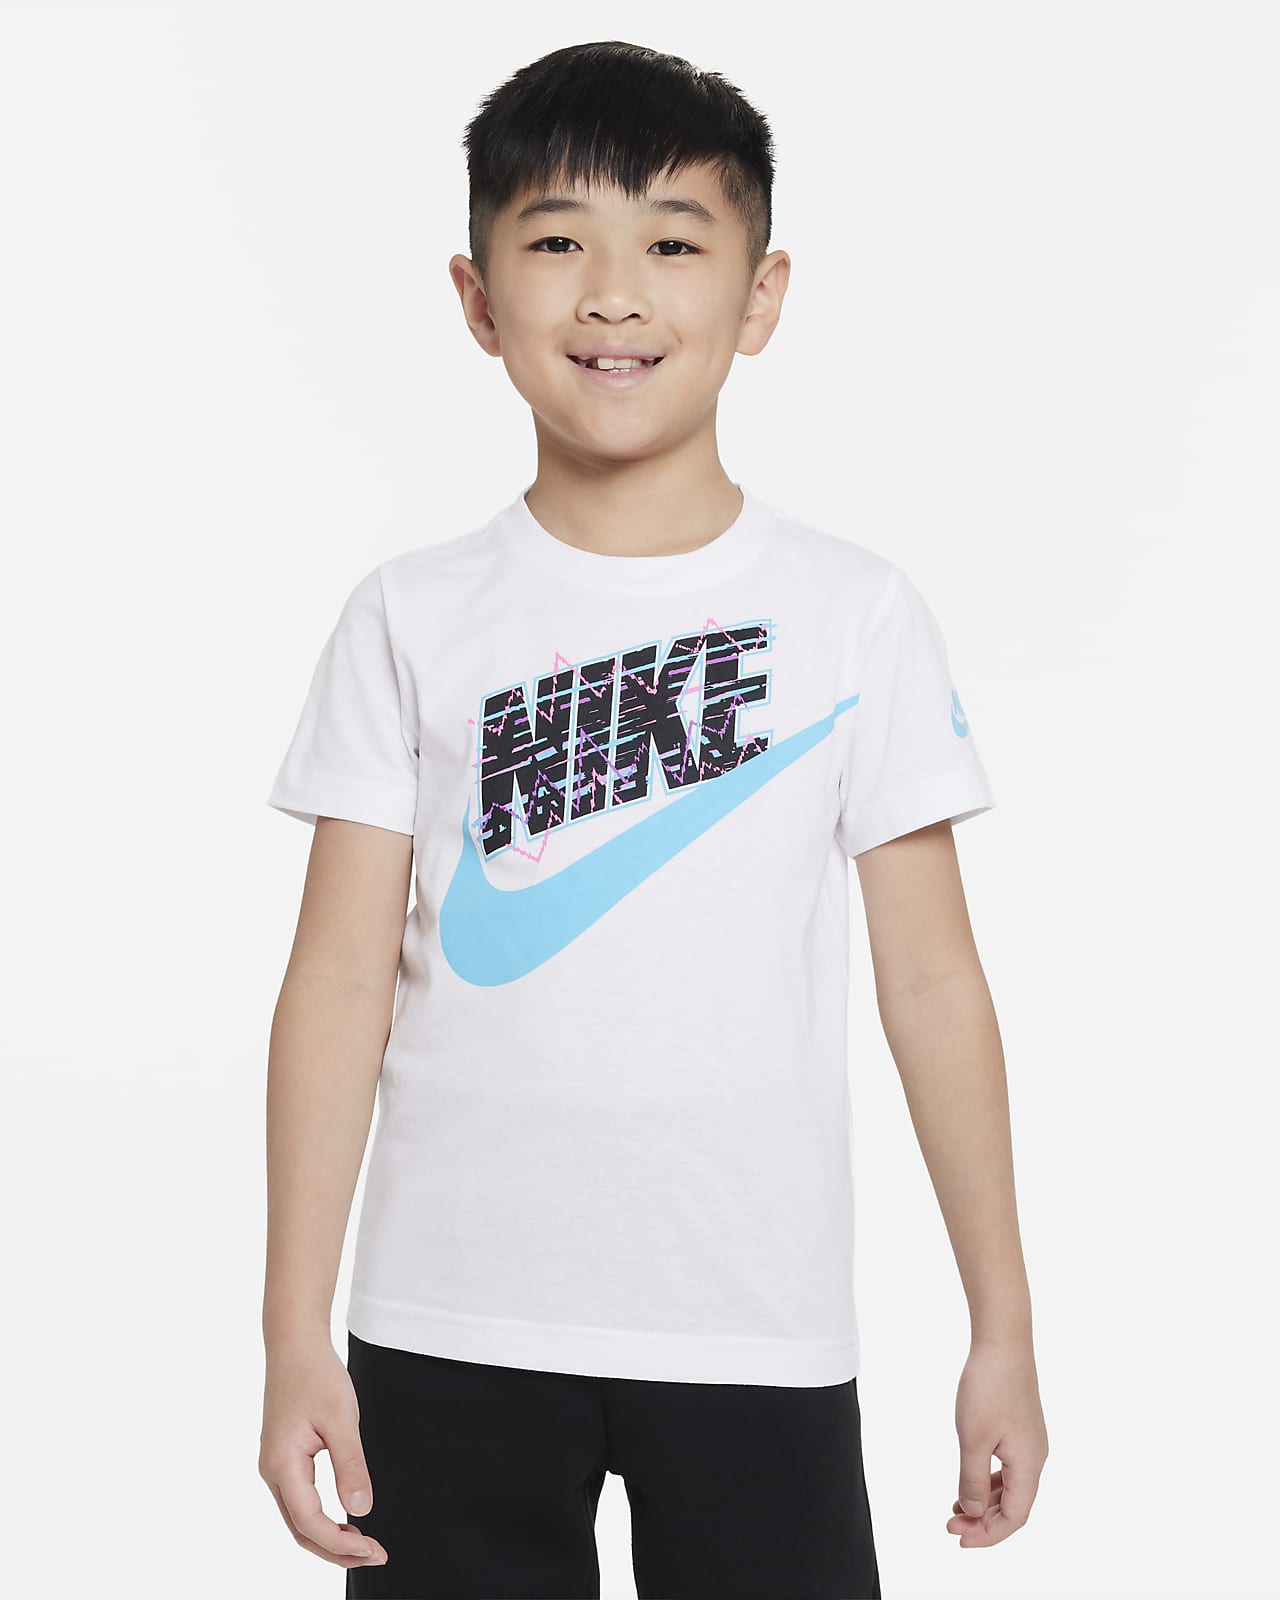 Tee New Nike Wave Kids\' T-Shirt. Little Futura